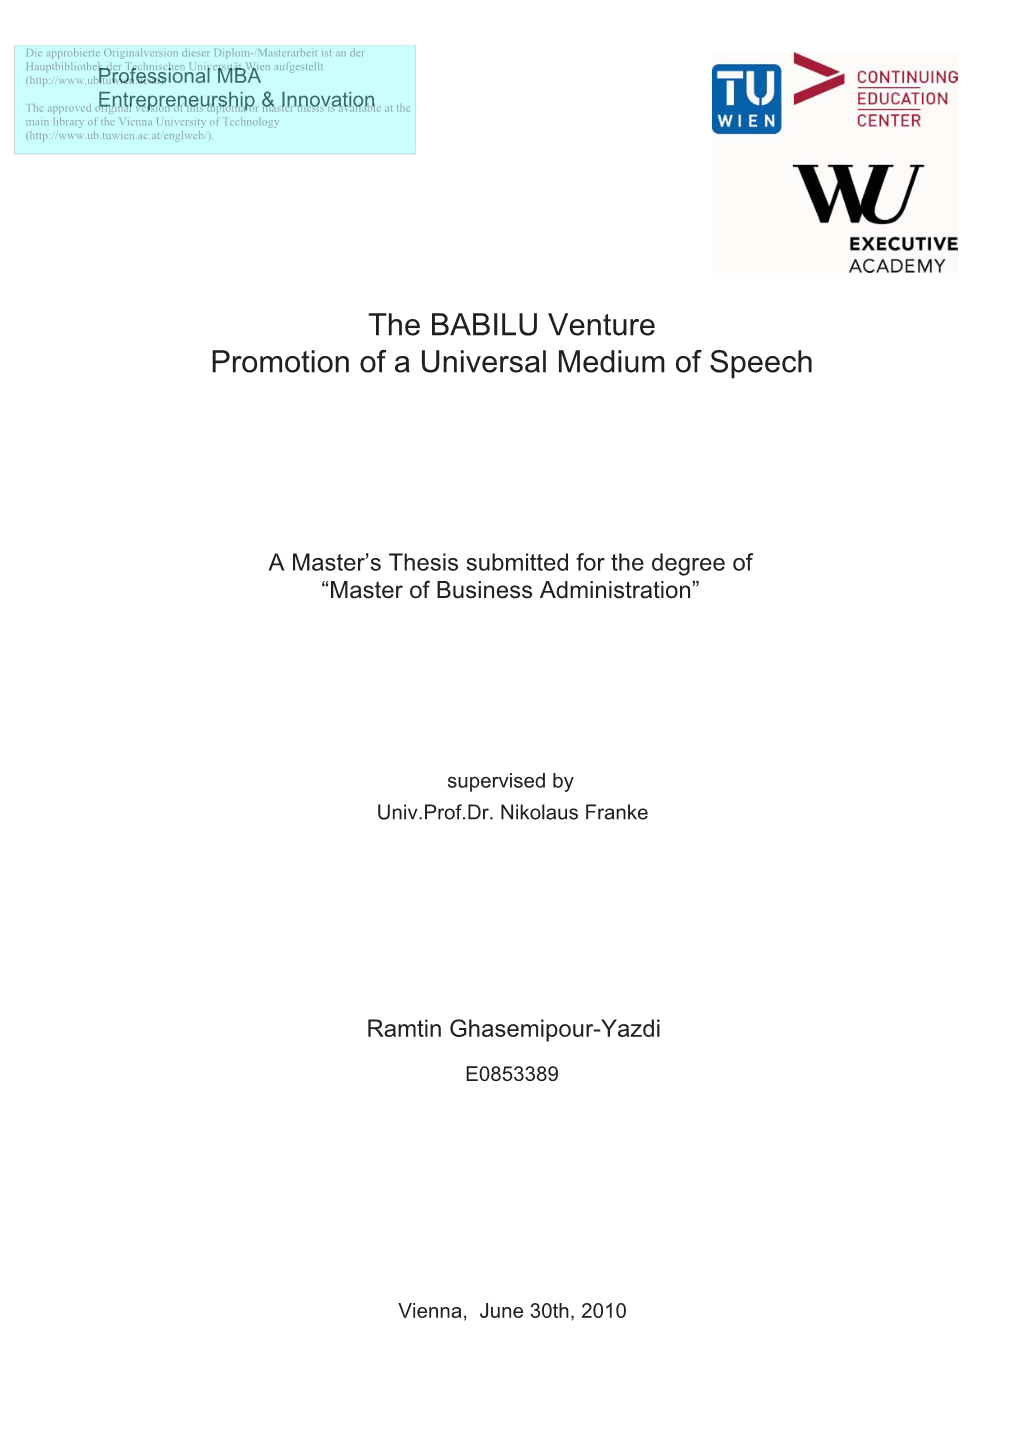 The BABILU Venture Promotion of a Universal Medium